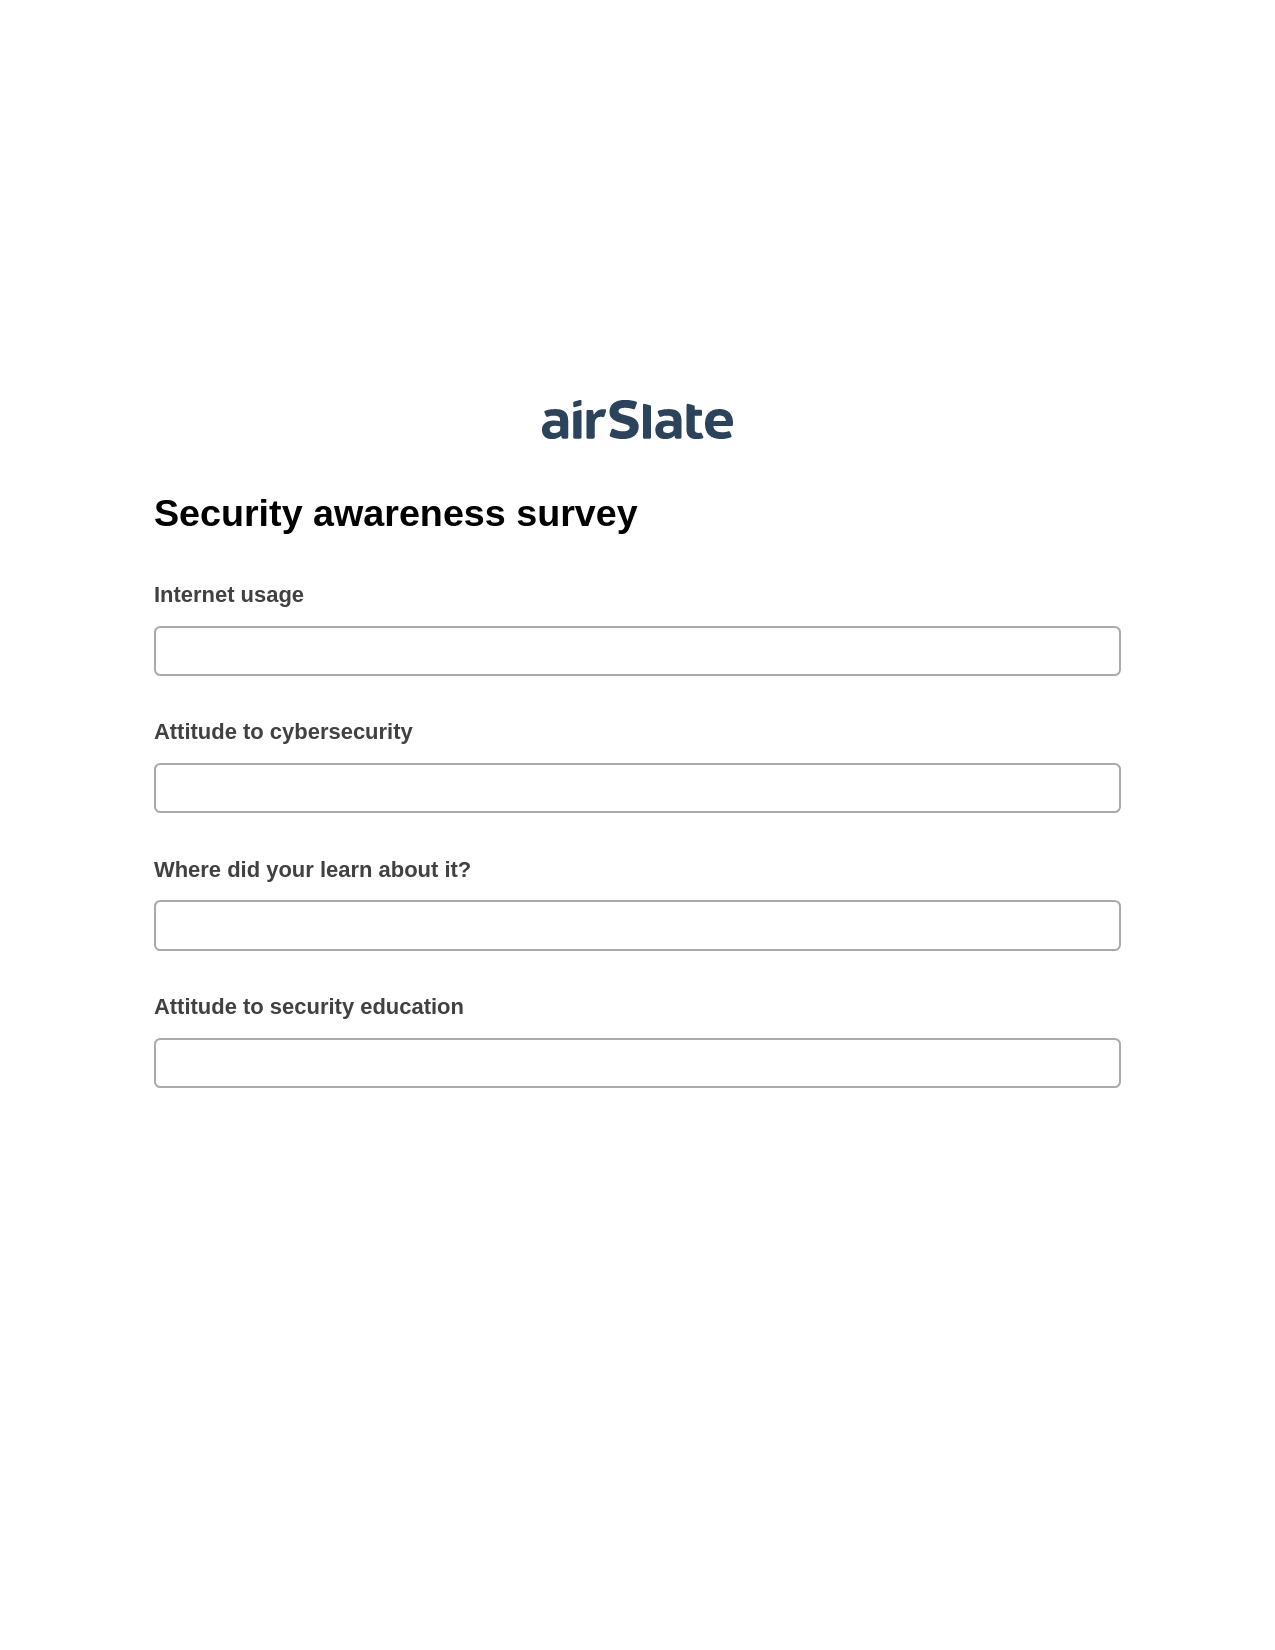 Multirole Security awareness survey Pre-fill from Smartsheet Bot, SendGrid send Campaign bot, Slack Two-Way Binding Bot